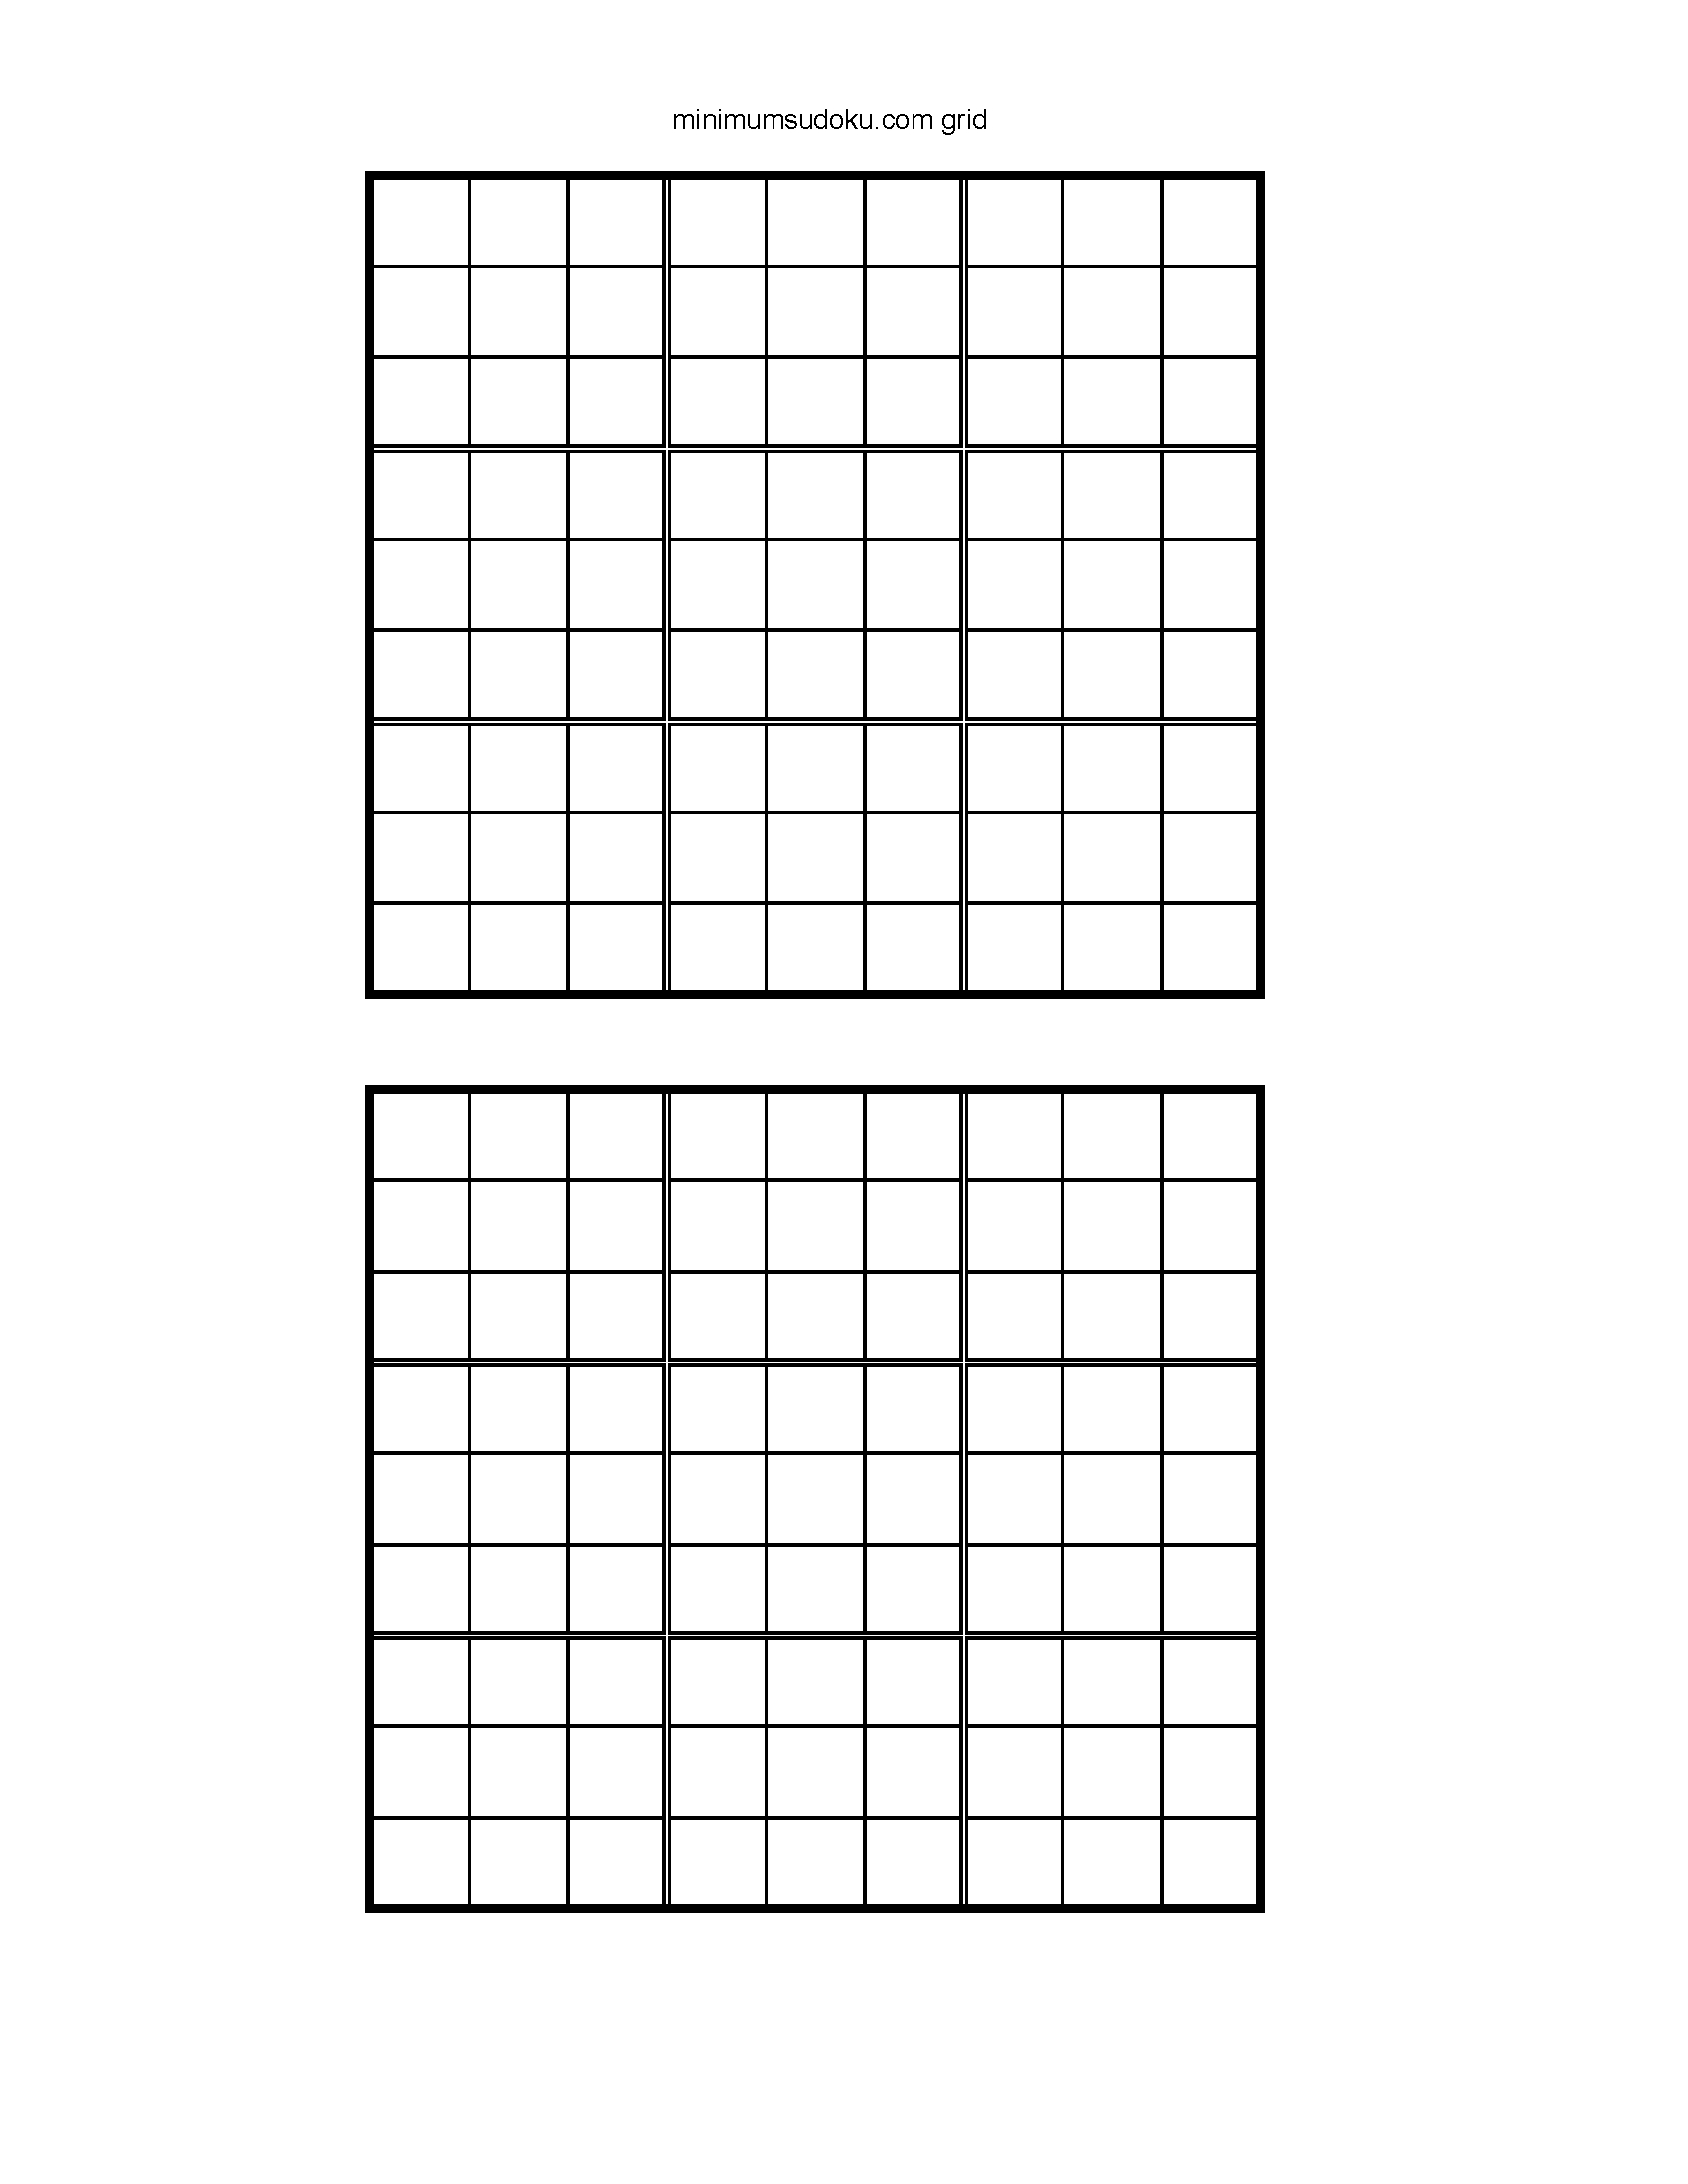 Blank Printable Sudoku Puzzle